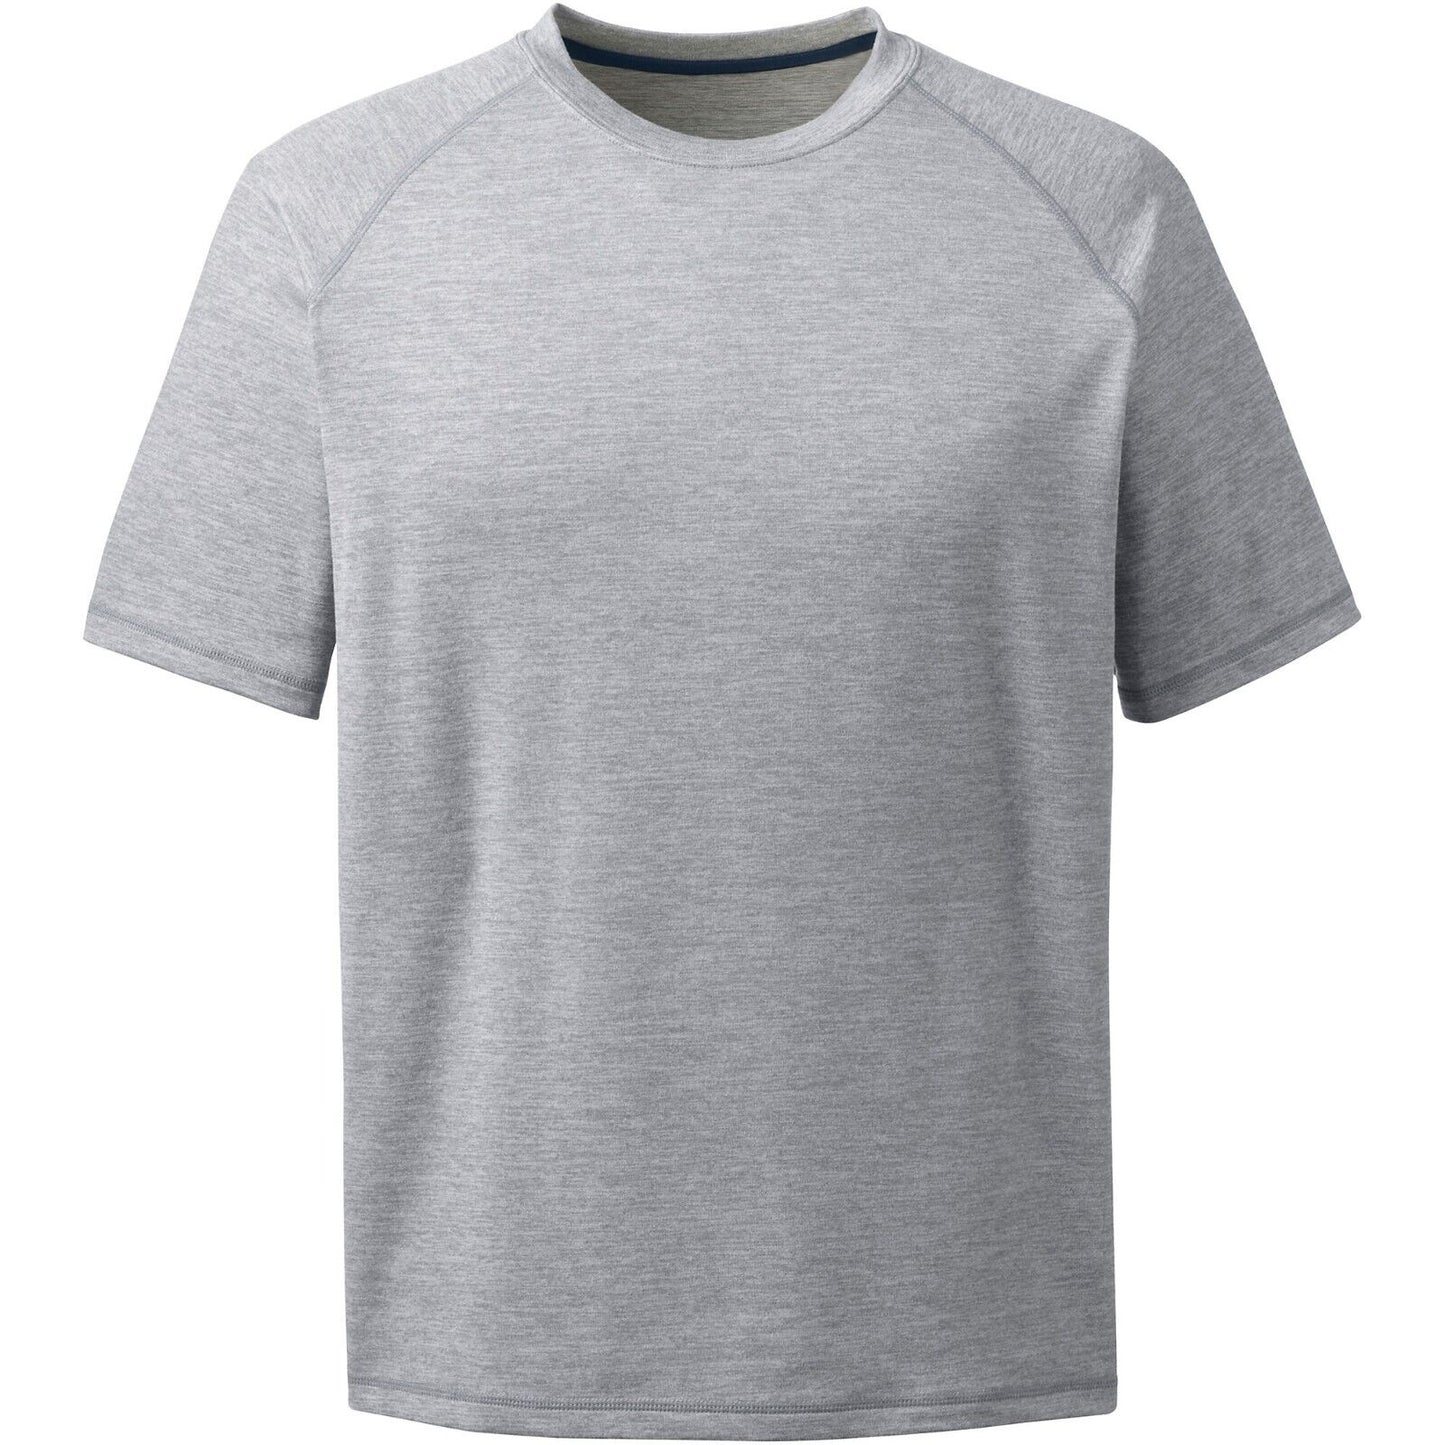 Mens Short Sleeve Active Gym T Shirt Size L